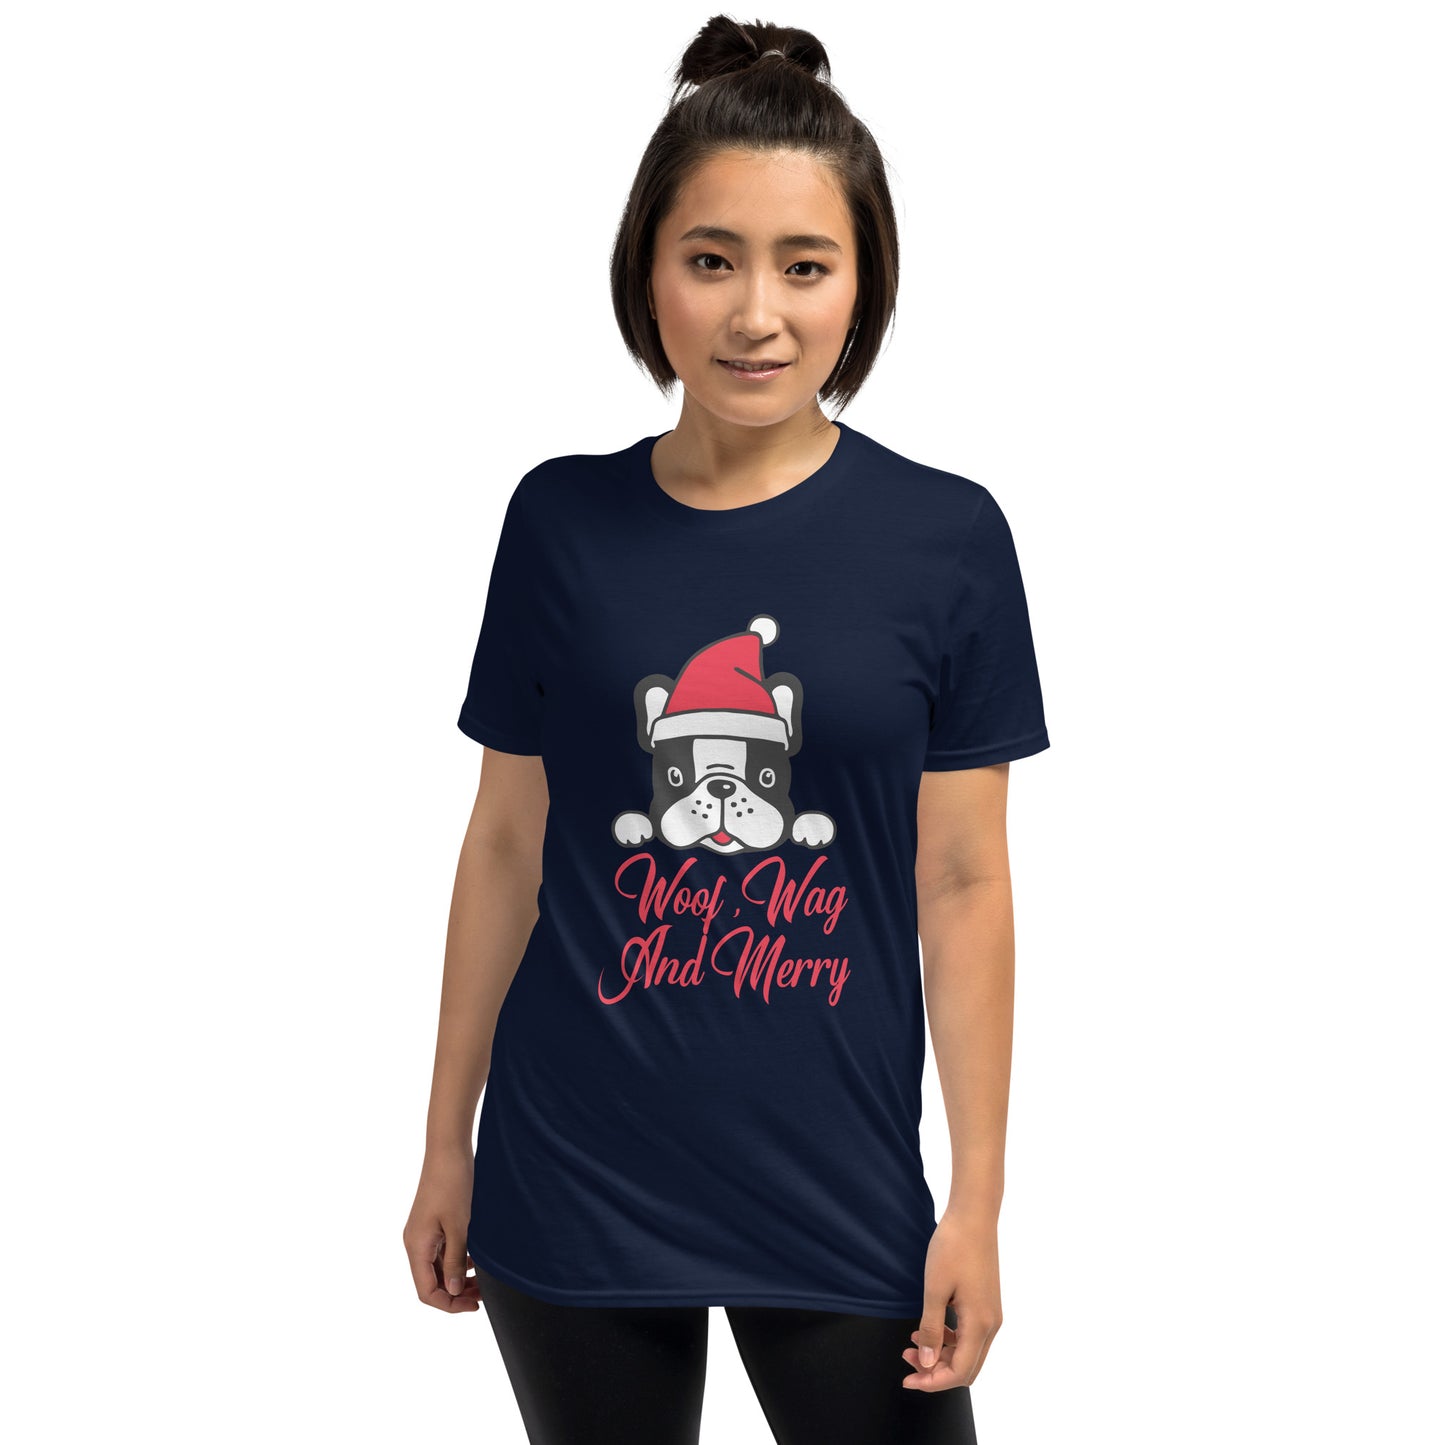 Ideal Festive Gift - Unisex T-Shirt